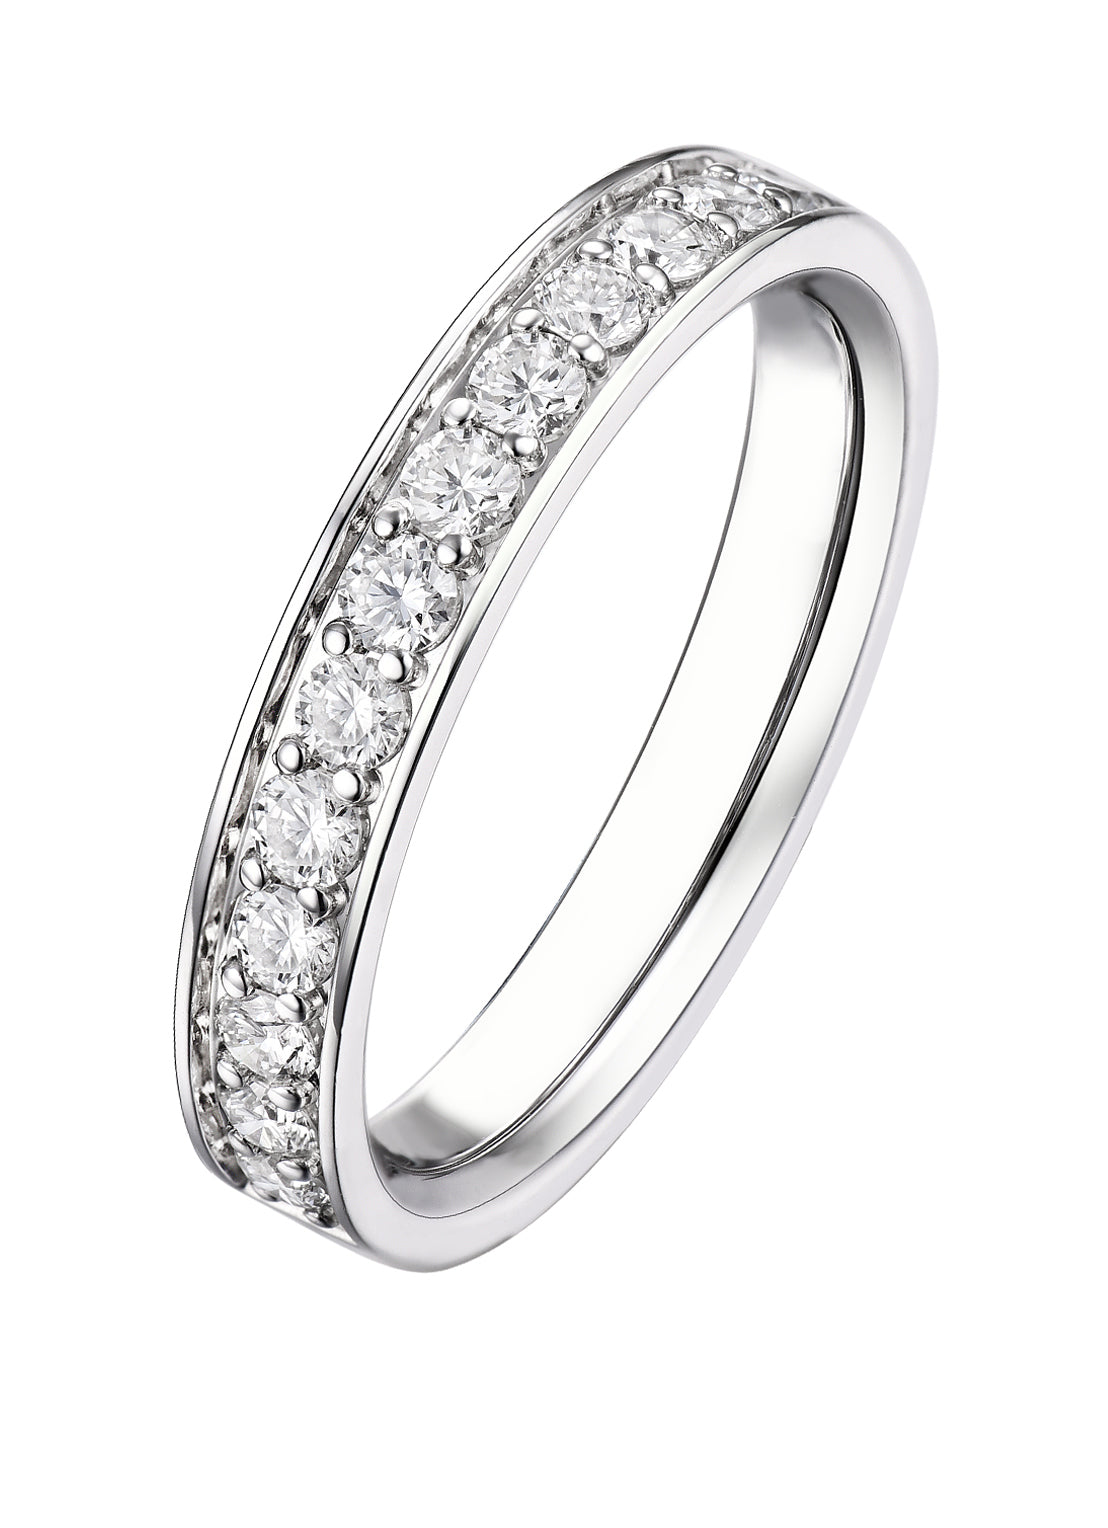 White gold ring, 0.50 ct diamond, wedding